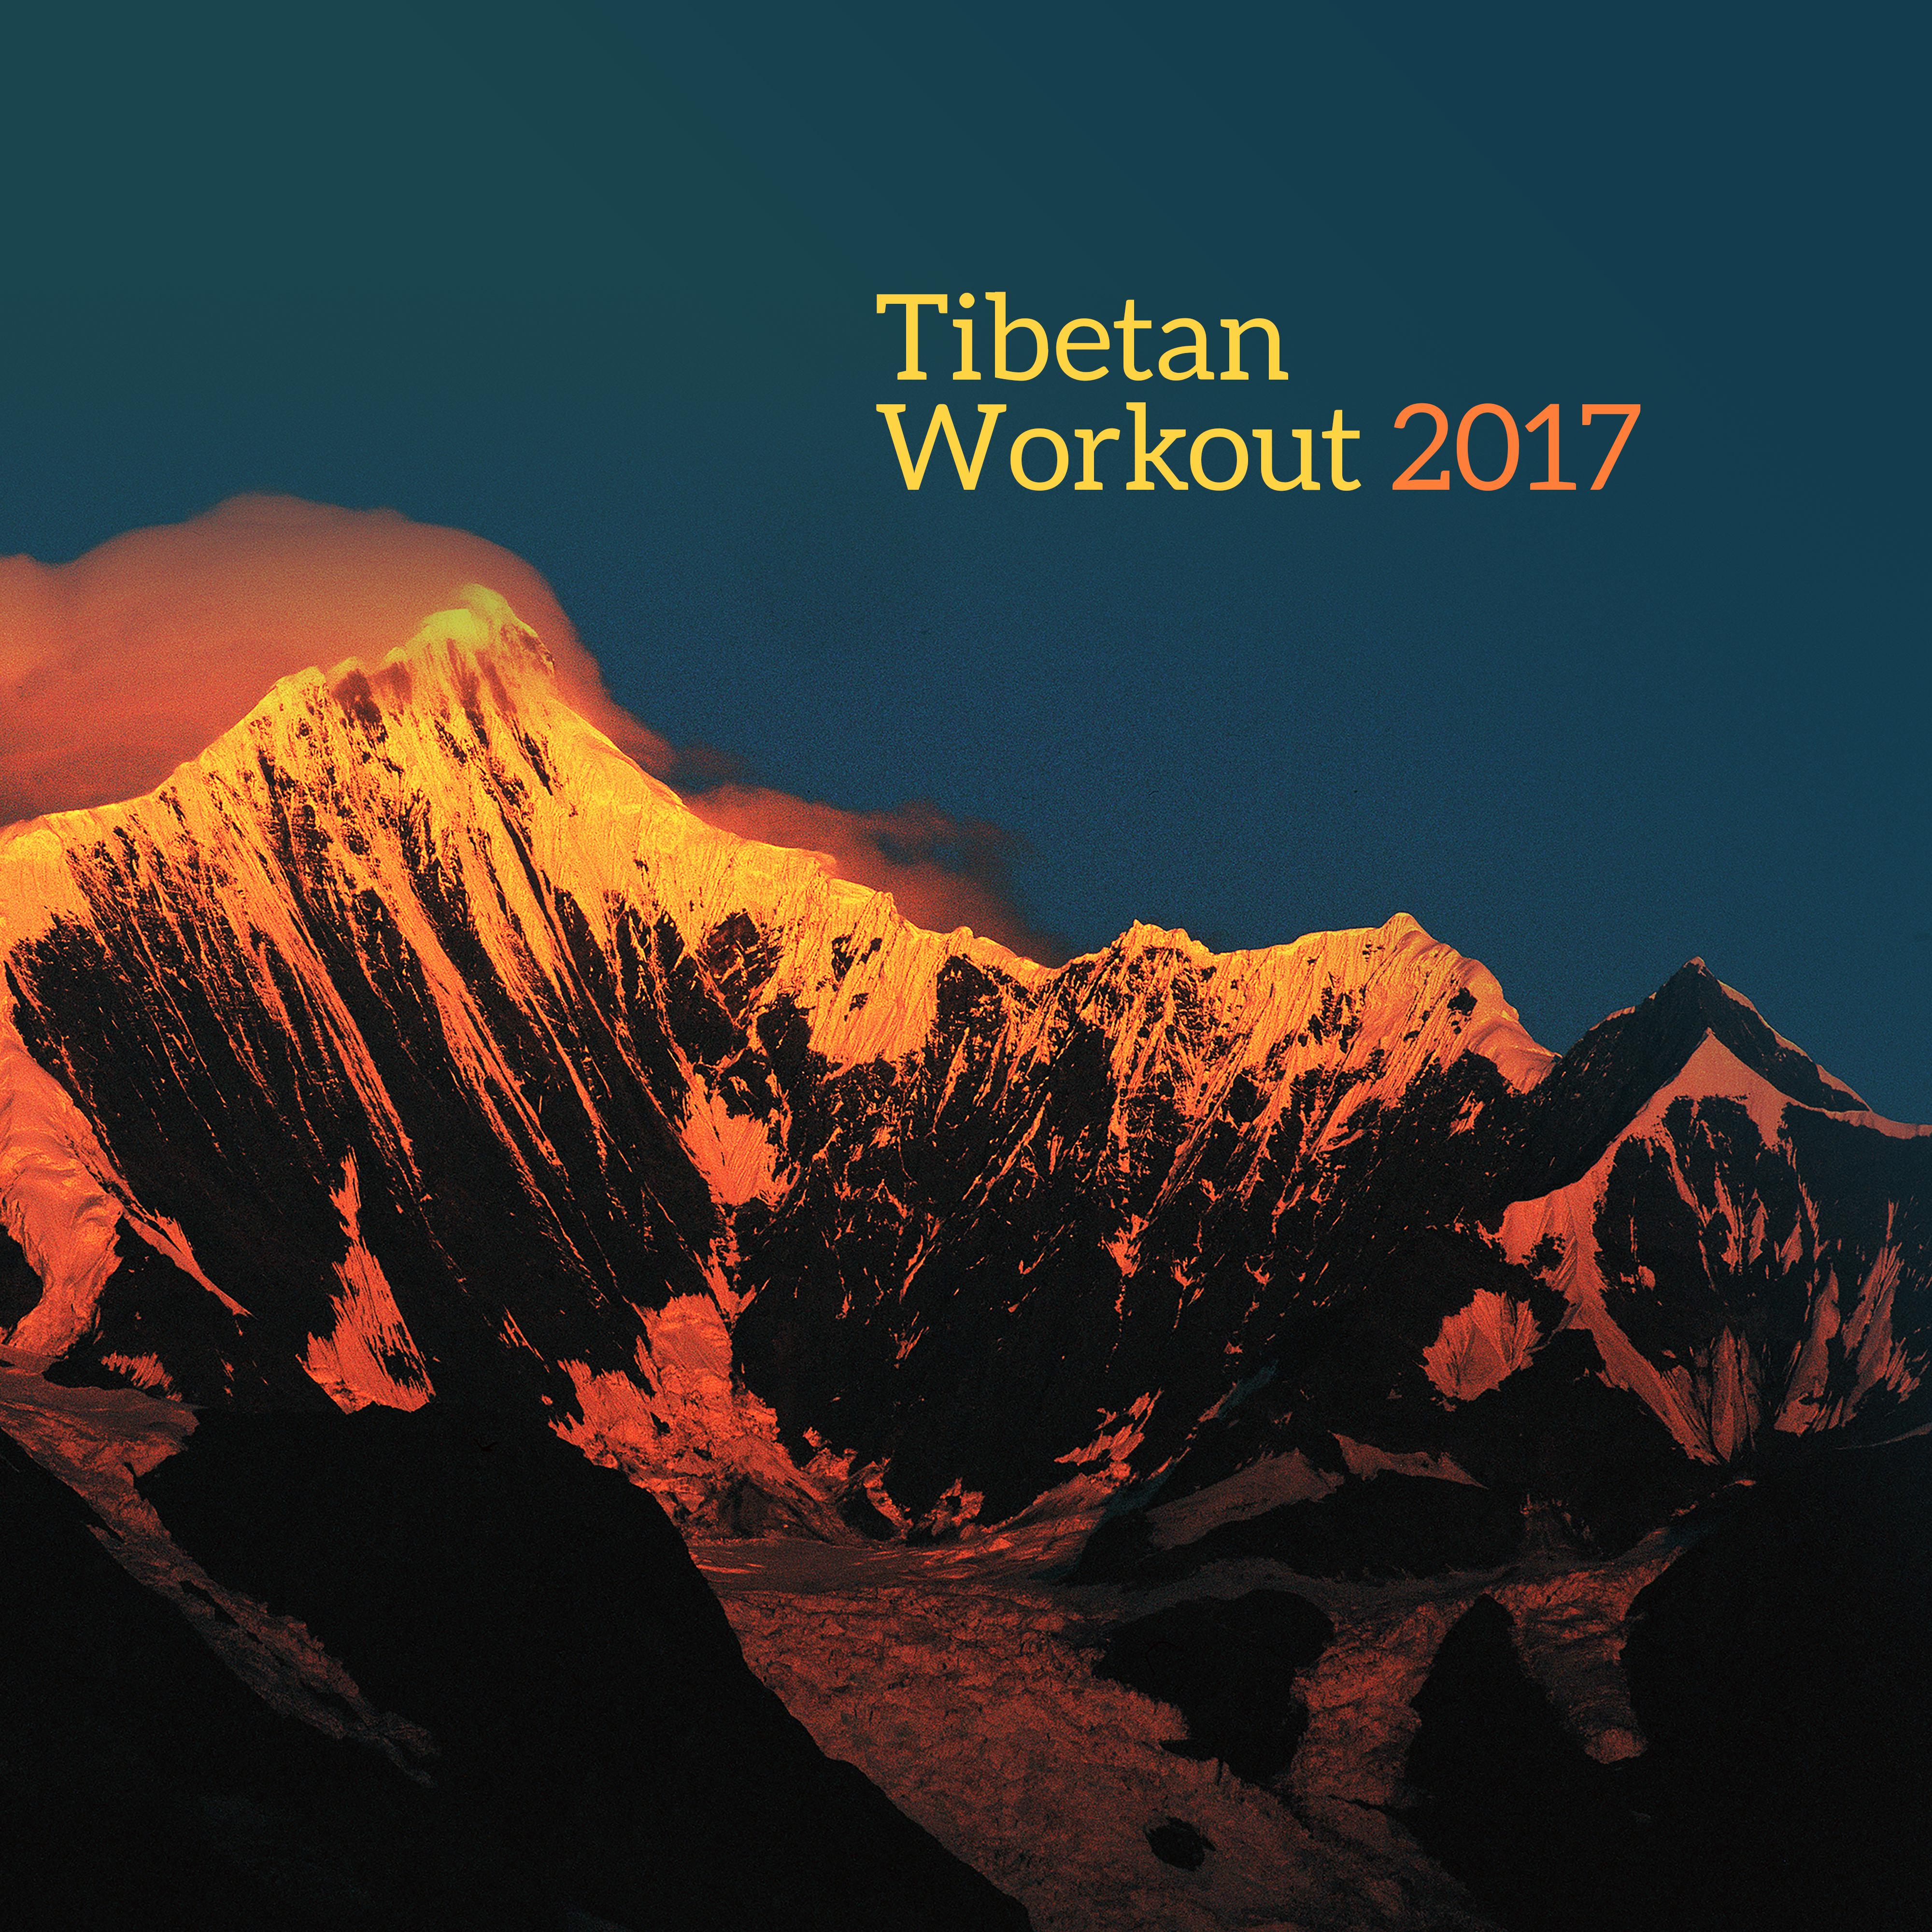 Tibetan Workout 2017